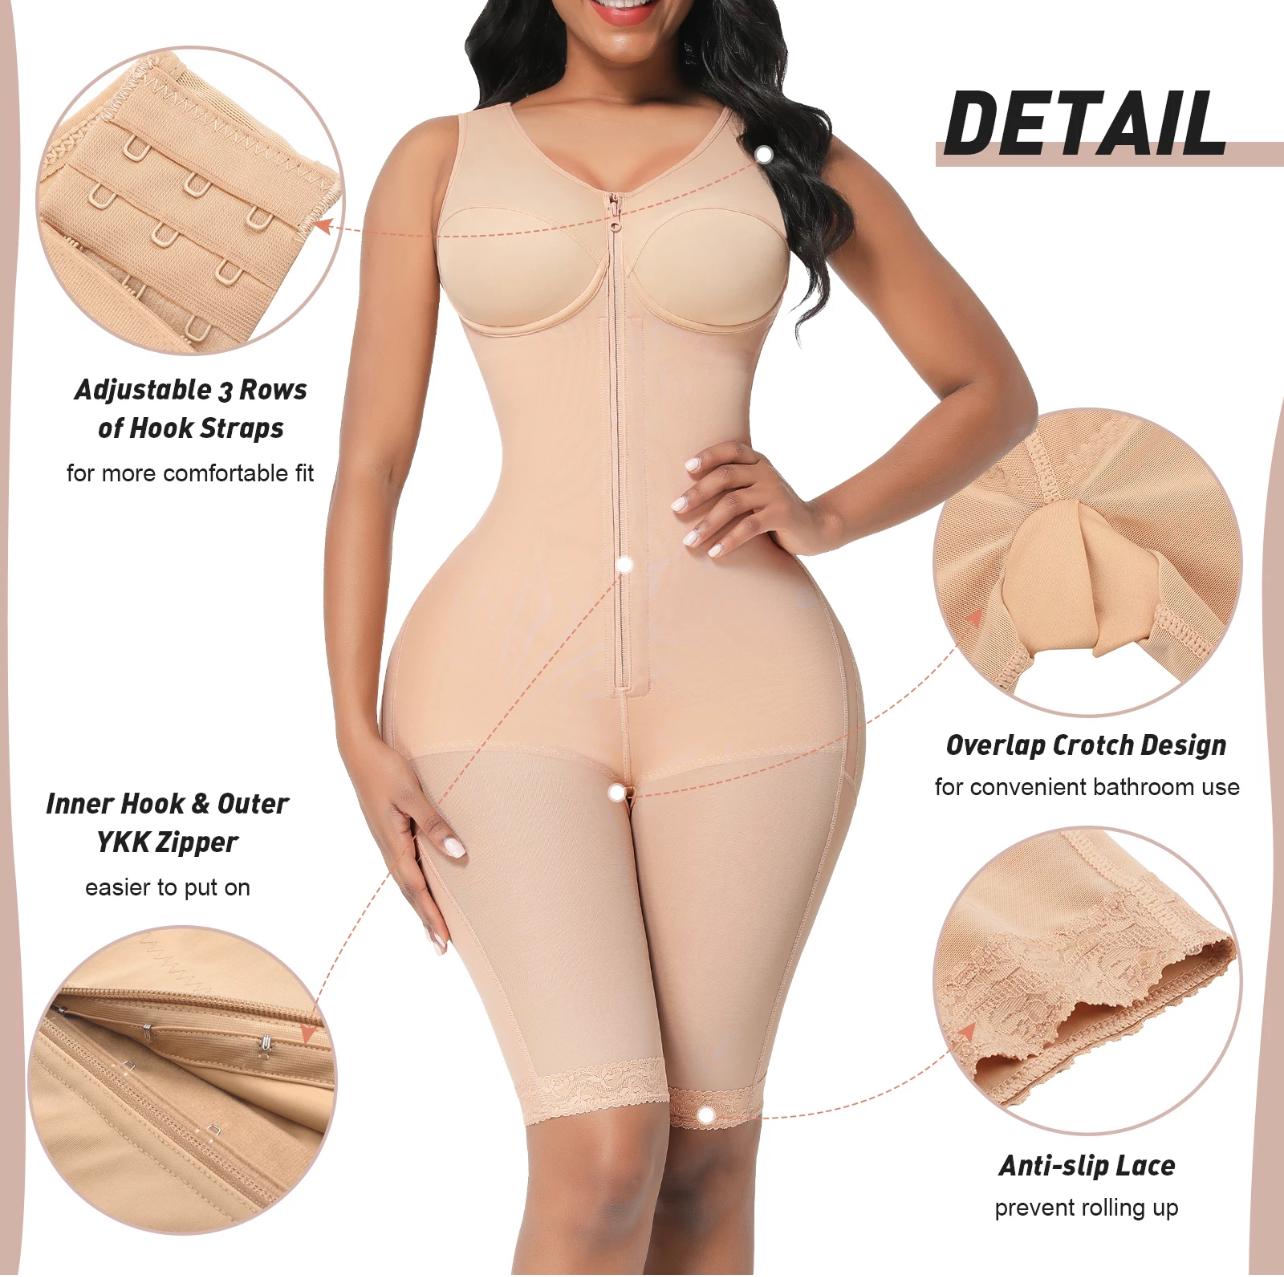 REF: 8037 Ideal Faja for a bare-shoulder dress, high compression